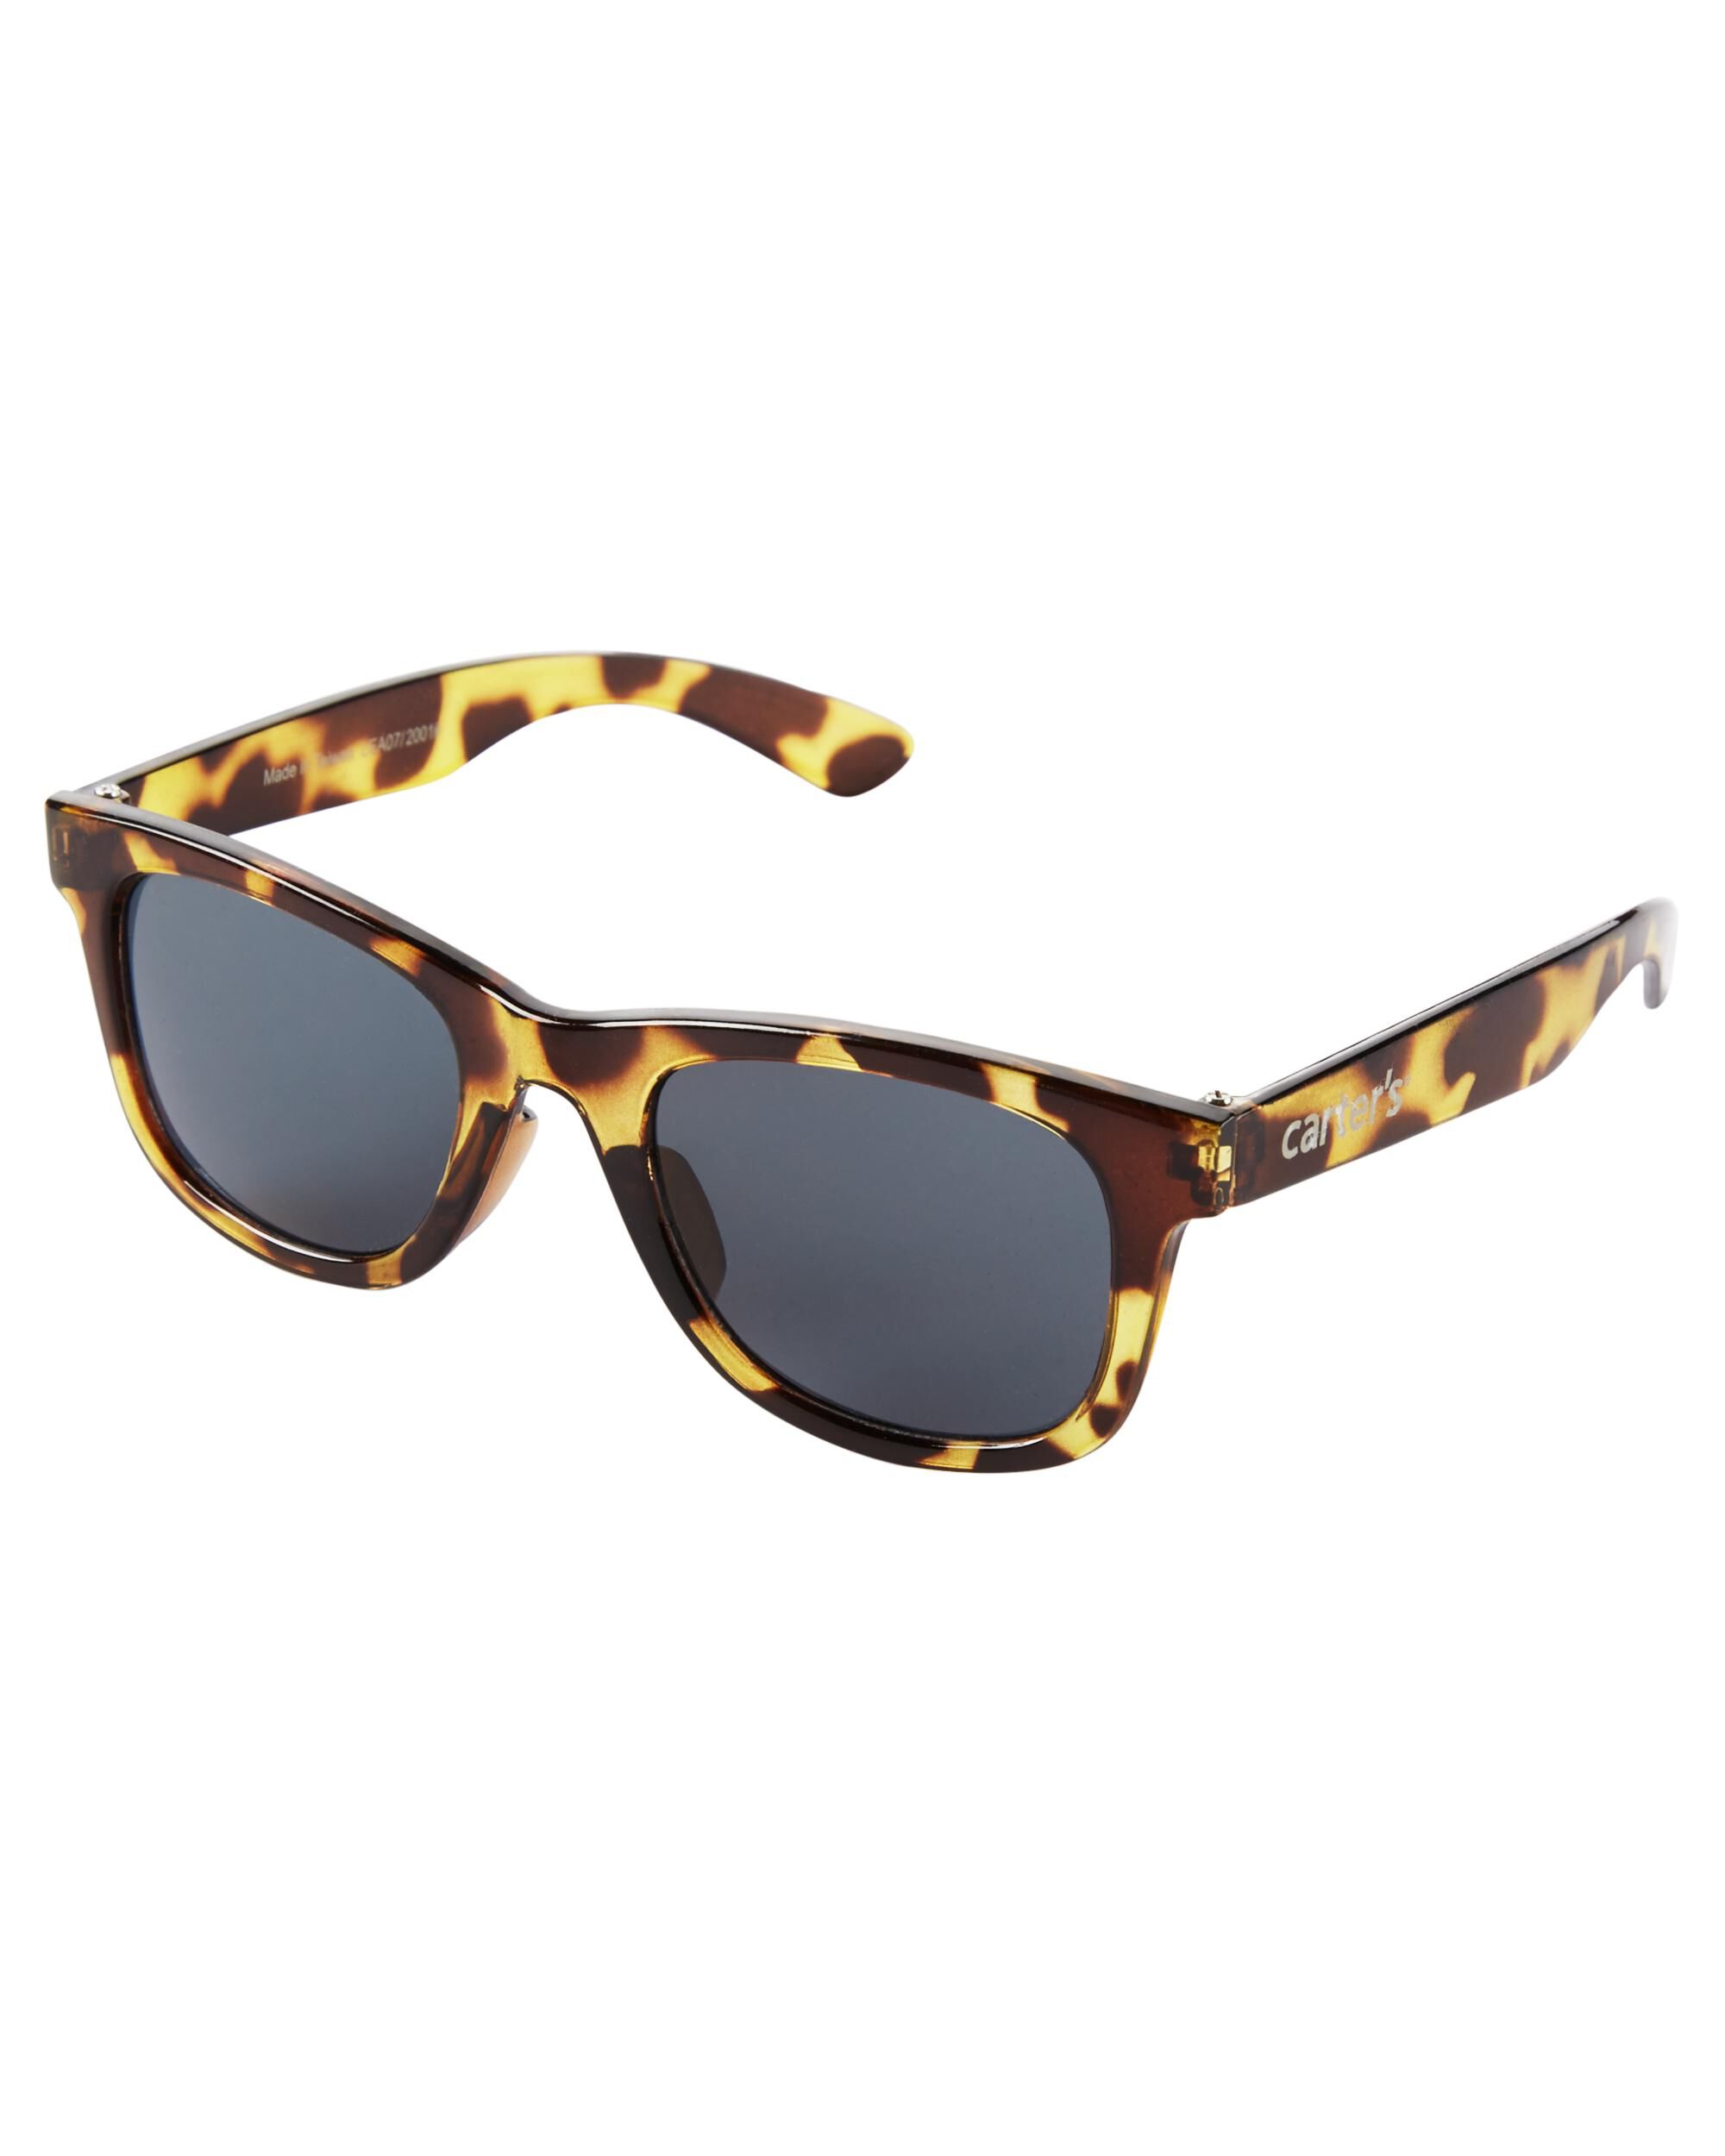 Carters Tortoise Shell Classic Sunglasses